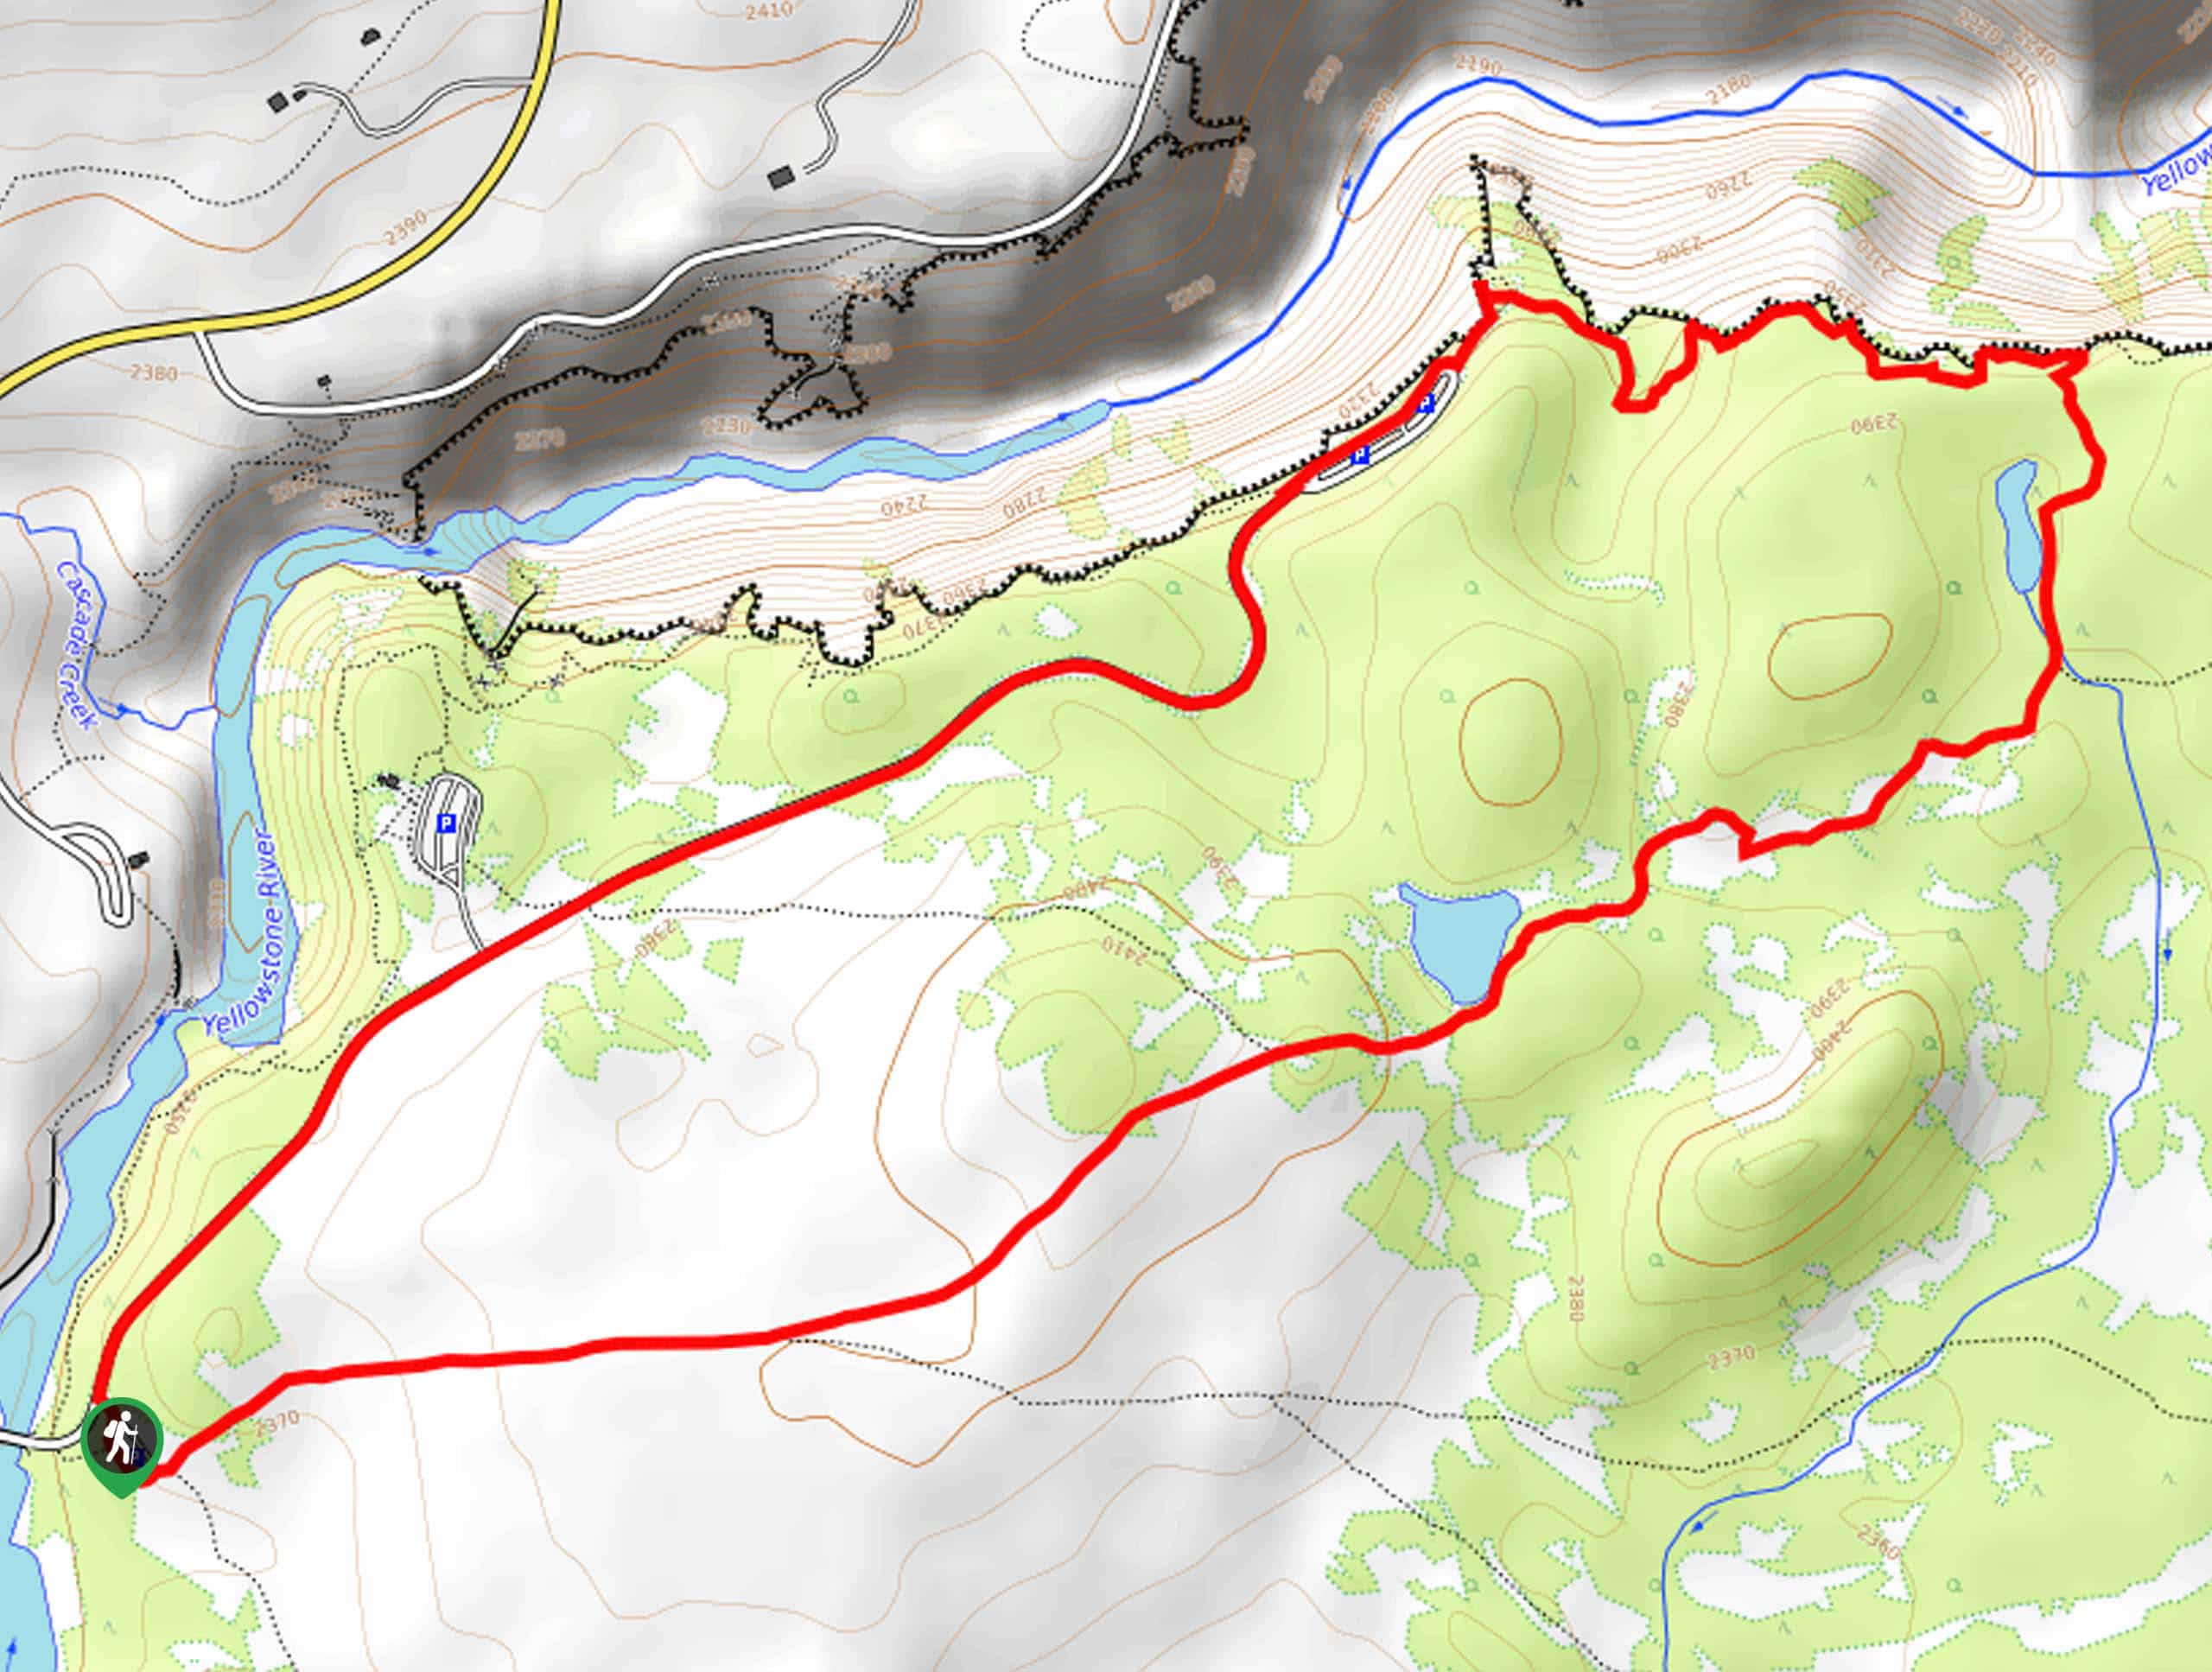 Clear Lake and Artist’s Point Loop via the Wapiti Lake Trailhead Map